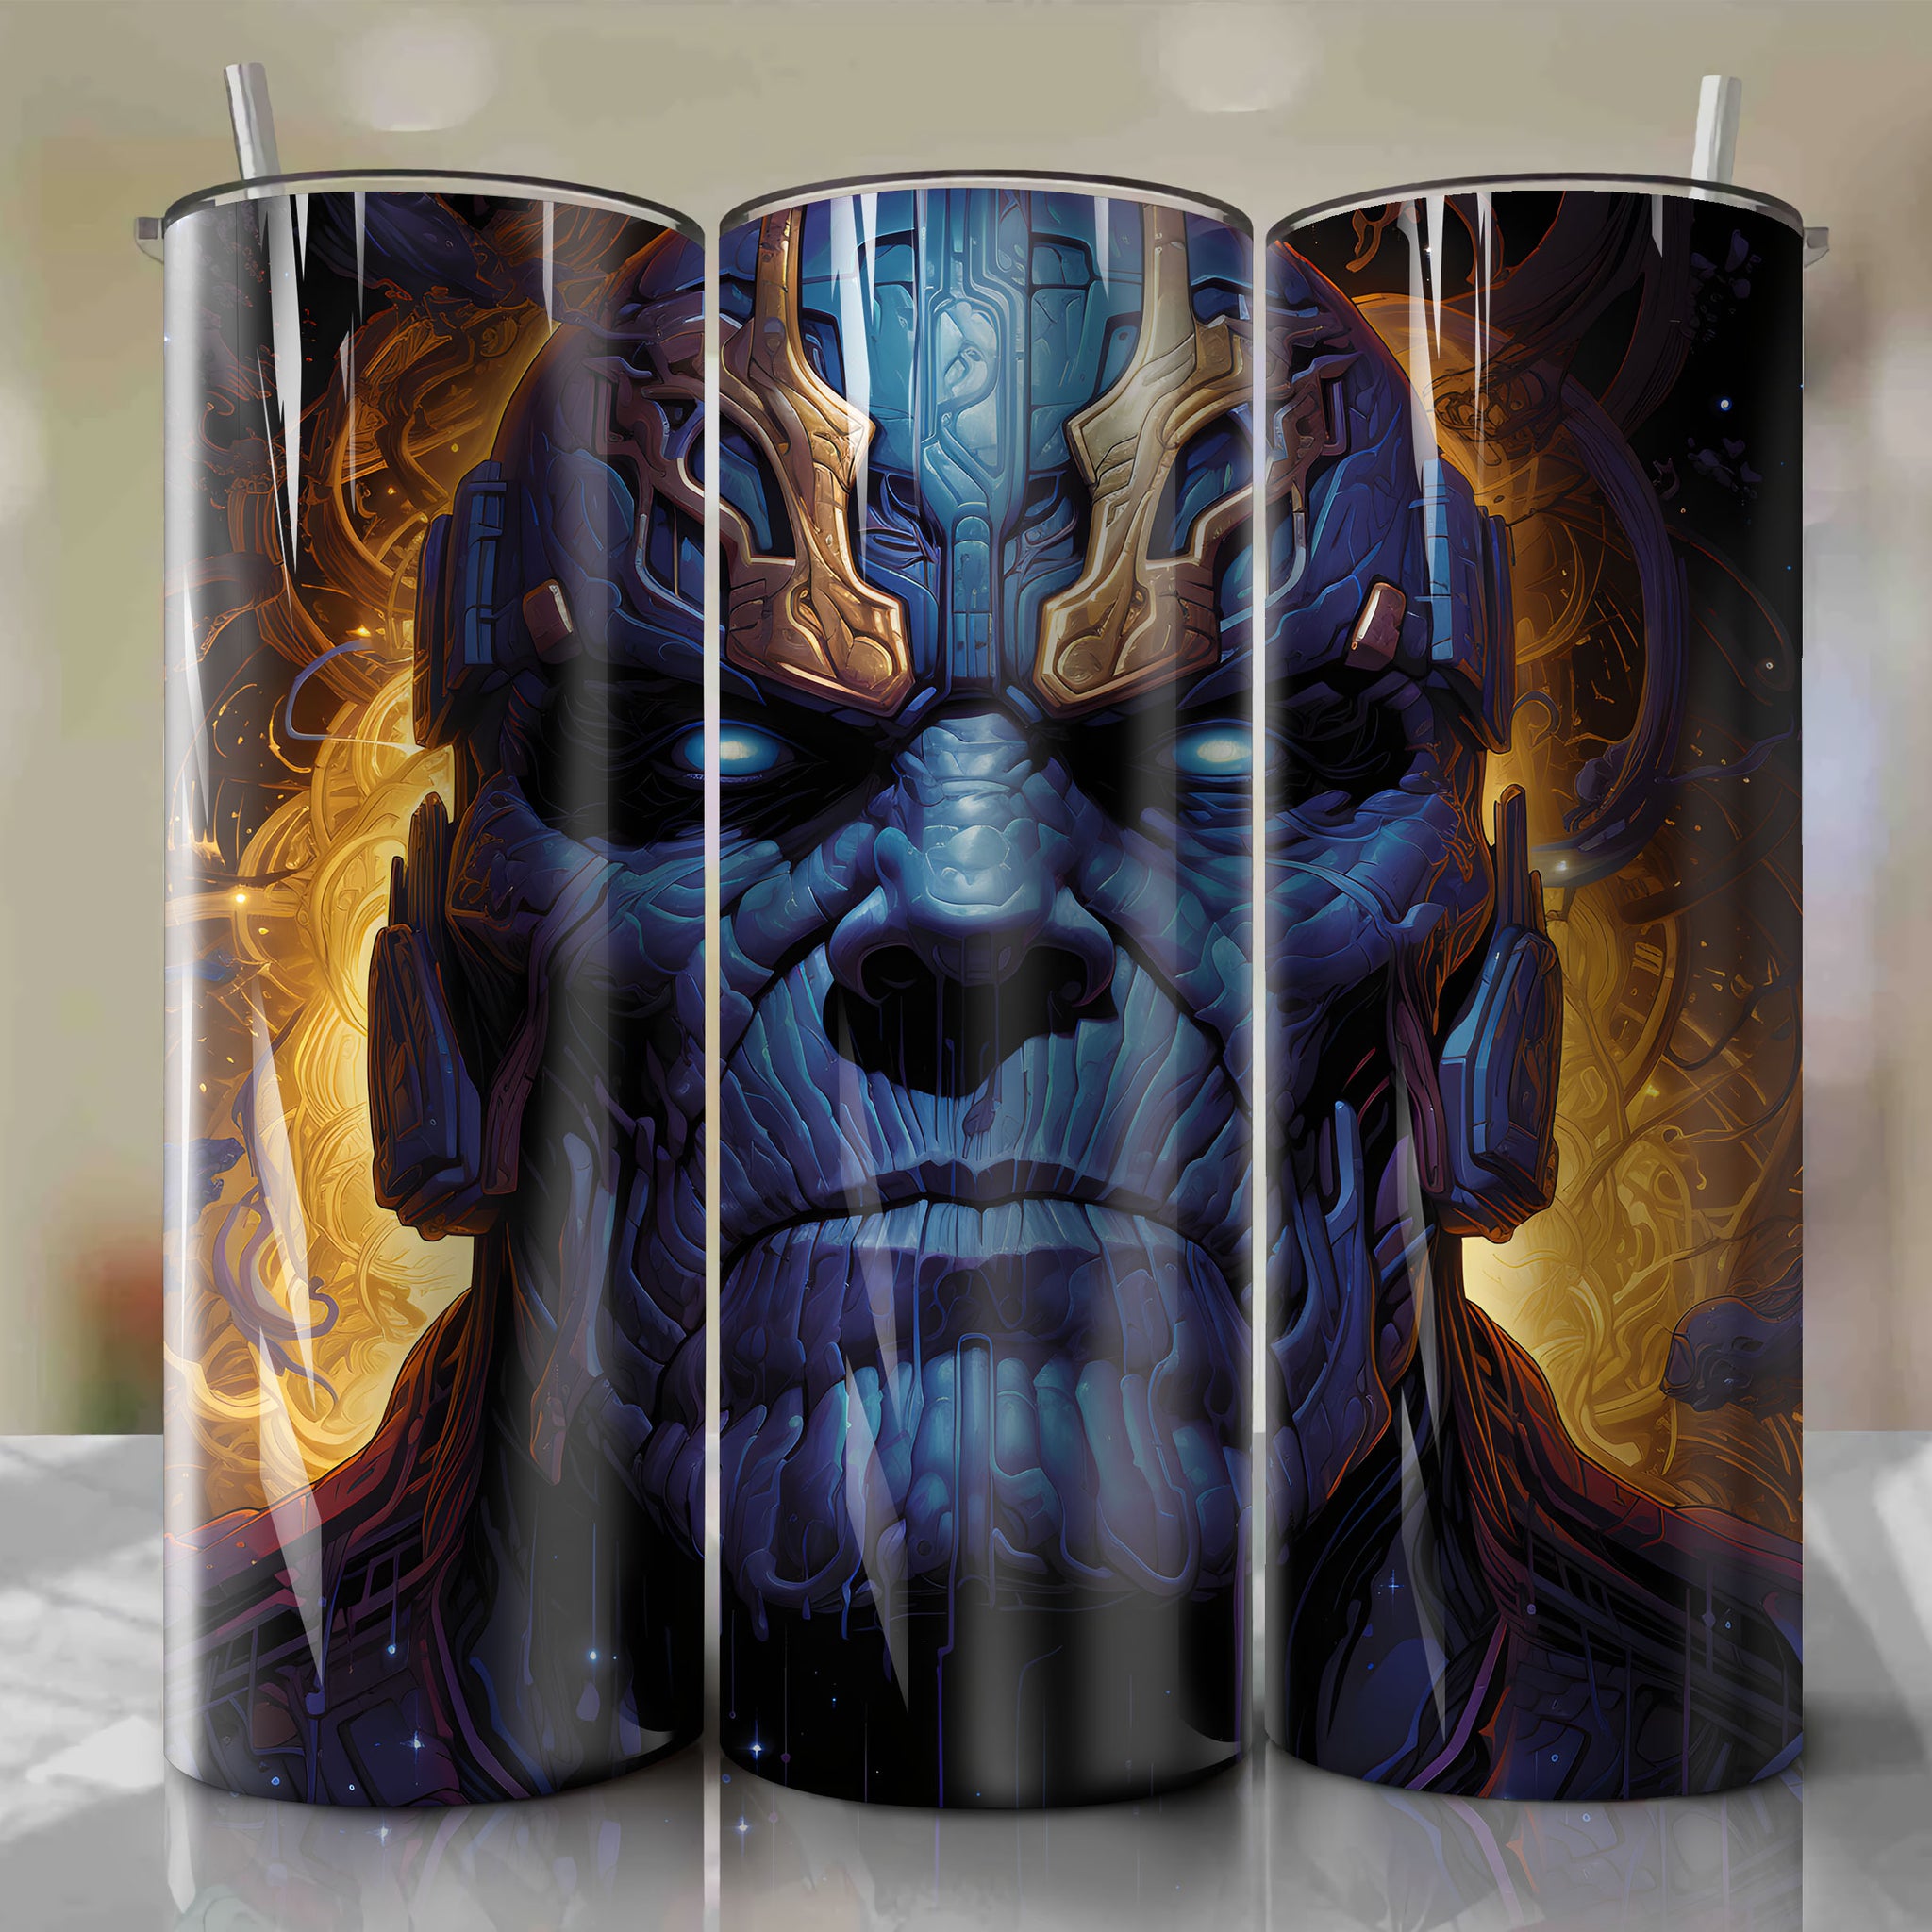 20 Oz Tumbler Wrap - Embodying the Power of Thanos in Stunning Cosmic Art
